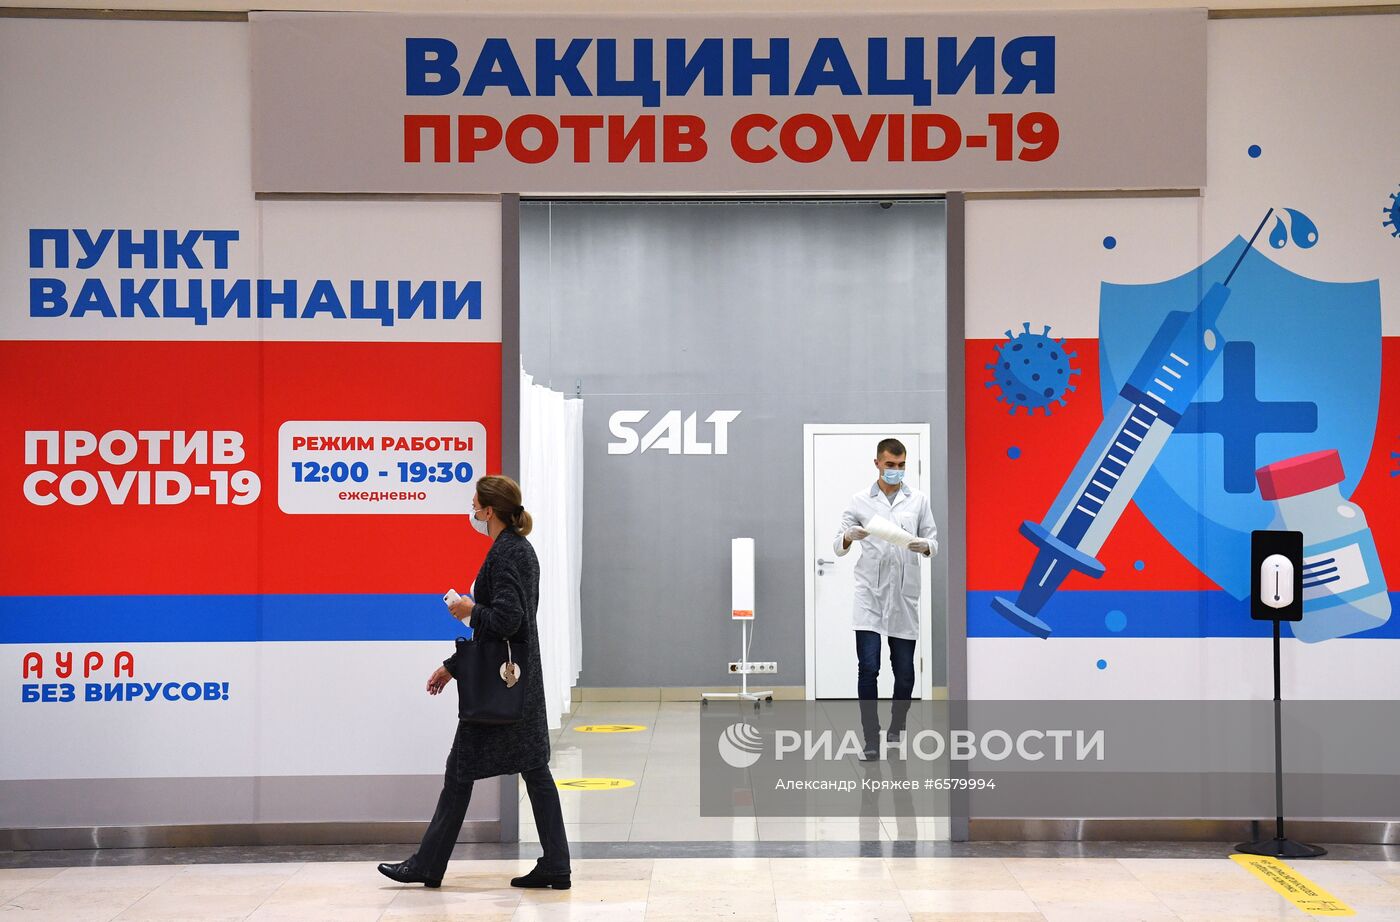 Вакцинация от COVID-19 в торговом центре в Новосибирске